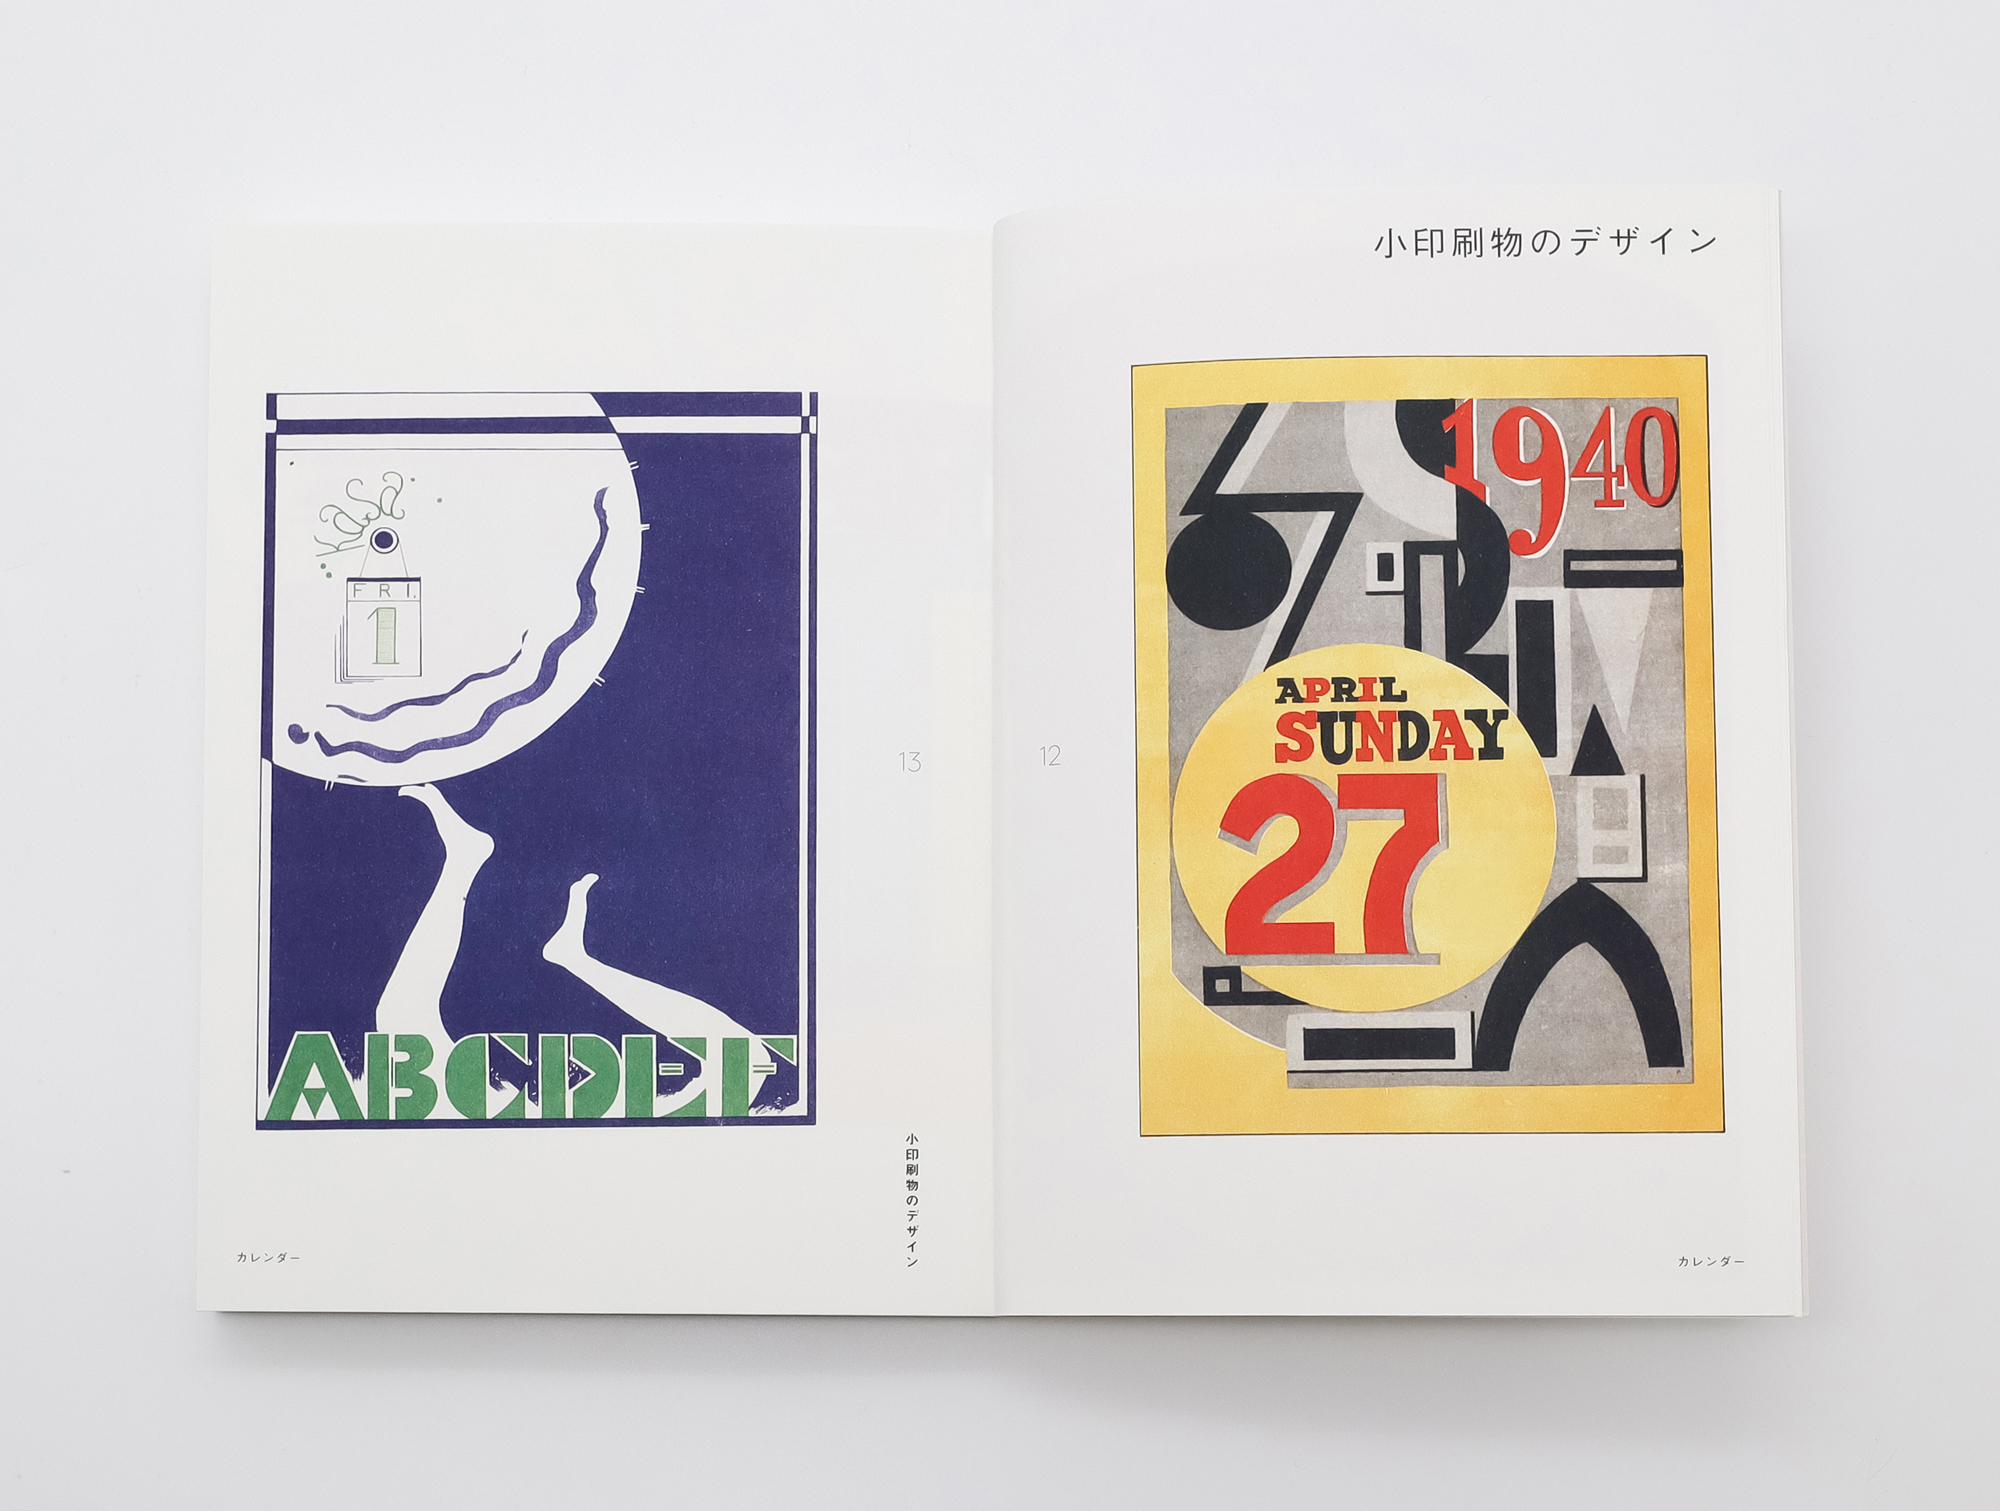 Japanese Watercolor Sketchbook #1, Showa Era (1950-1960) – That